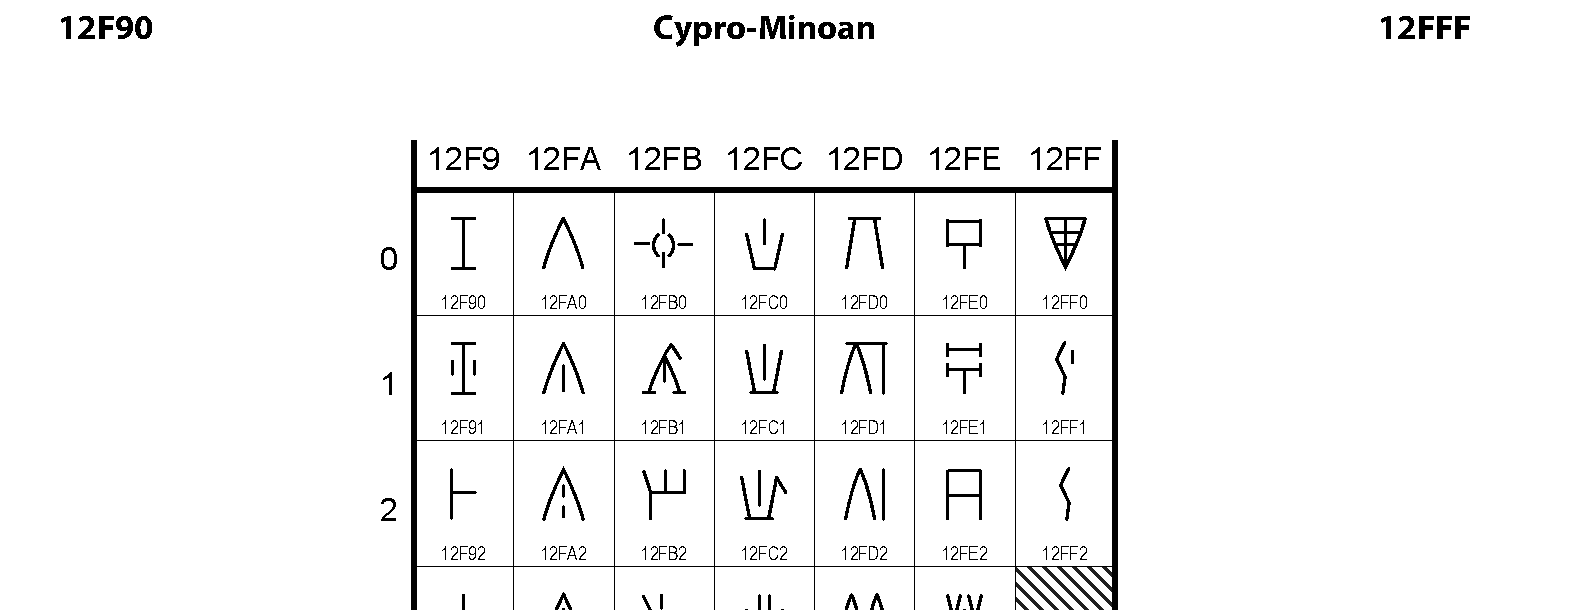 Unicode - Cypro-Minoan